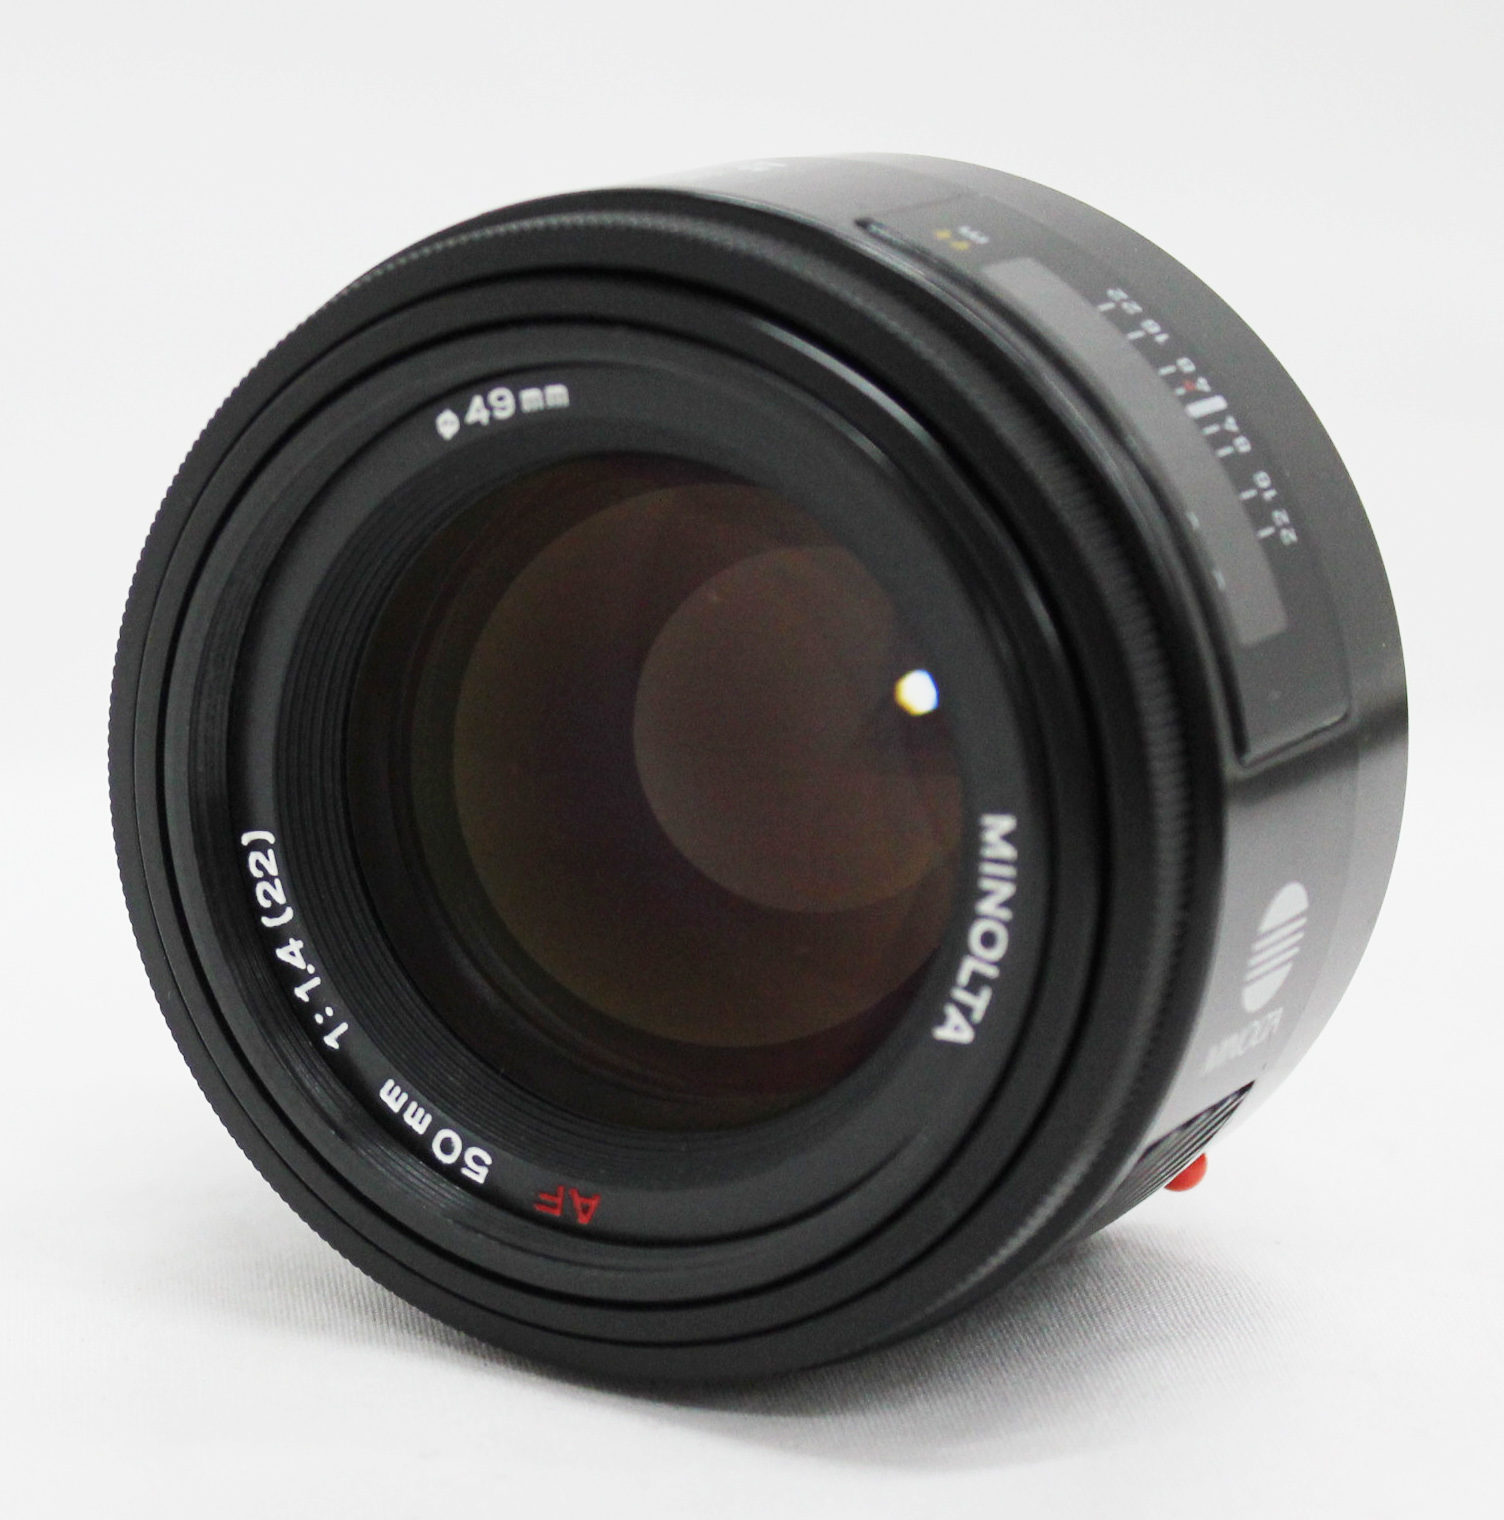 Japan Used Camera Shop | [Mint] Minolta AF 50mm F/1.4 Lens for Minolta Sony A Mount from Japan